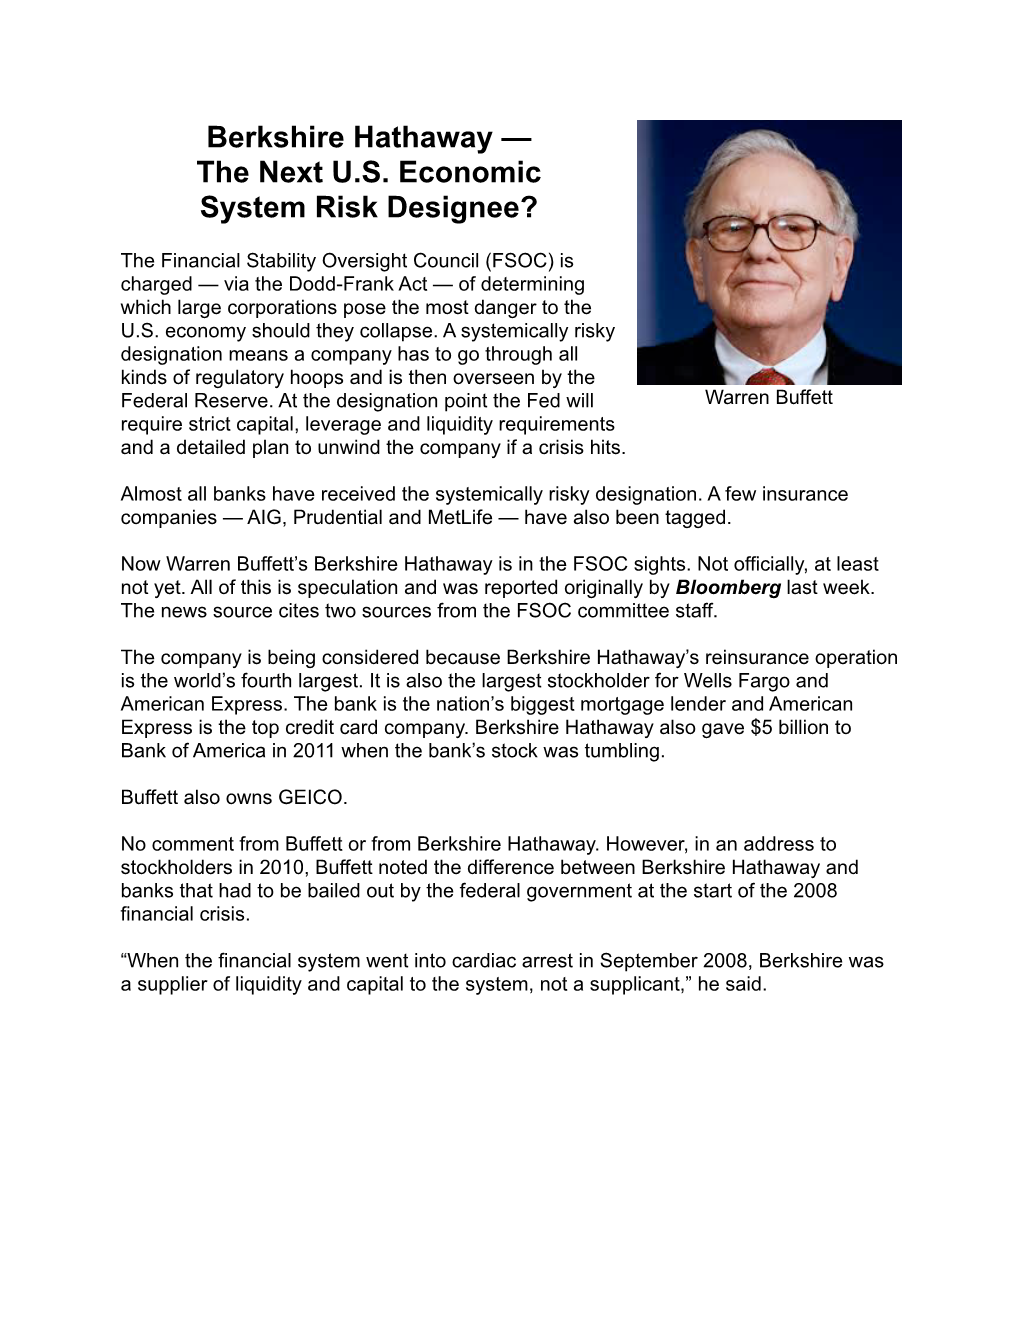 Berkshire Hathaway: the Next US Economic System Risk